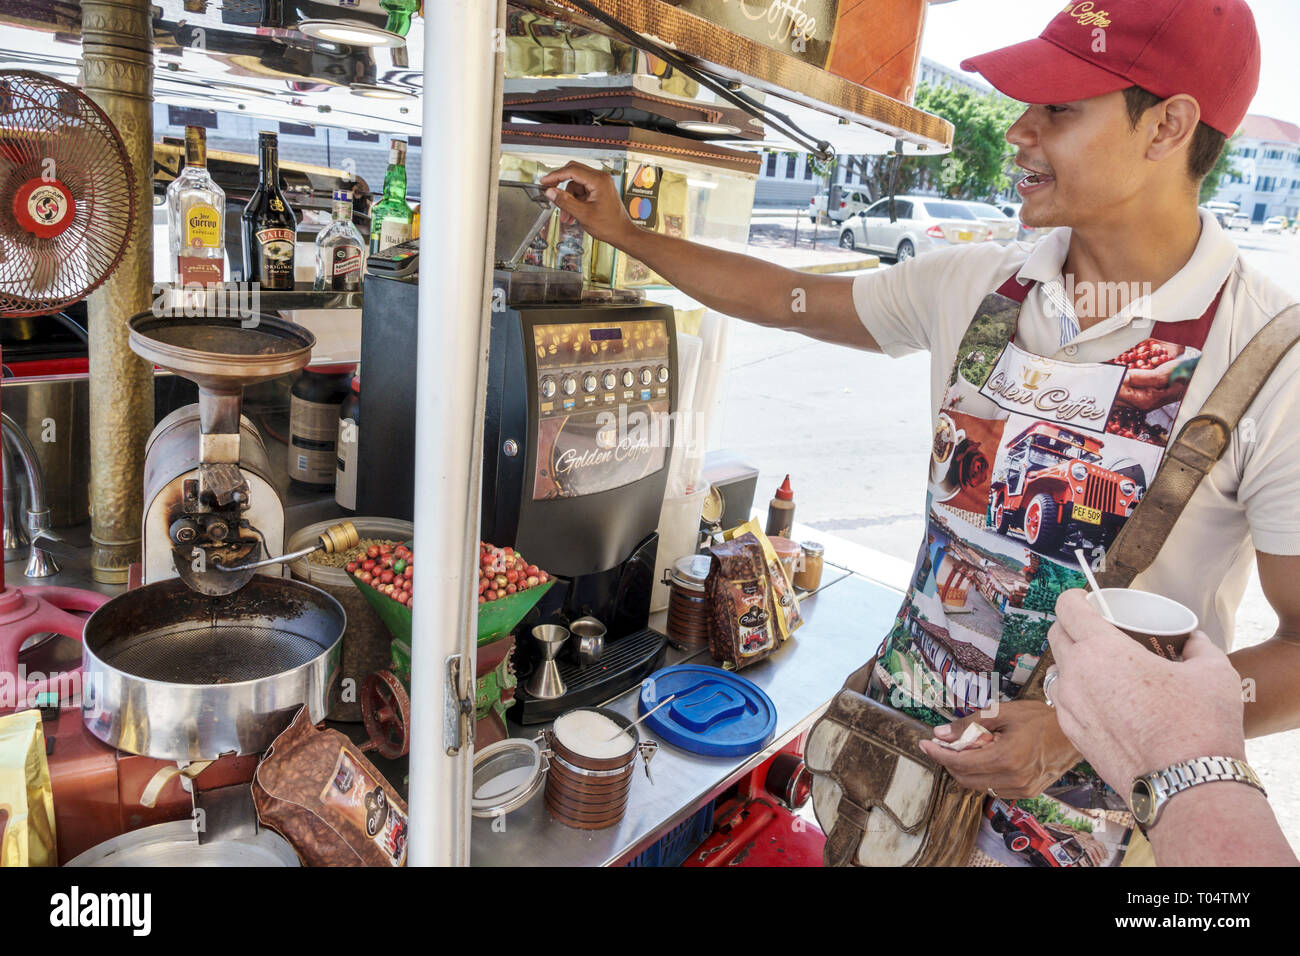 Cartagena Colombia,Golden Coffee,cart kiosk vendor seller,Hispanic Latin Latino ethnic immigrant immigrants minority,adult adults man men male,owner m Stock Photo